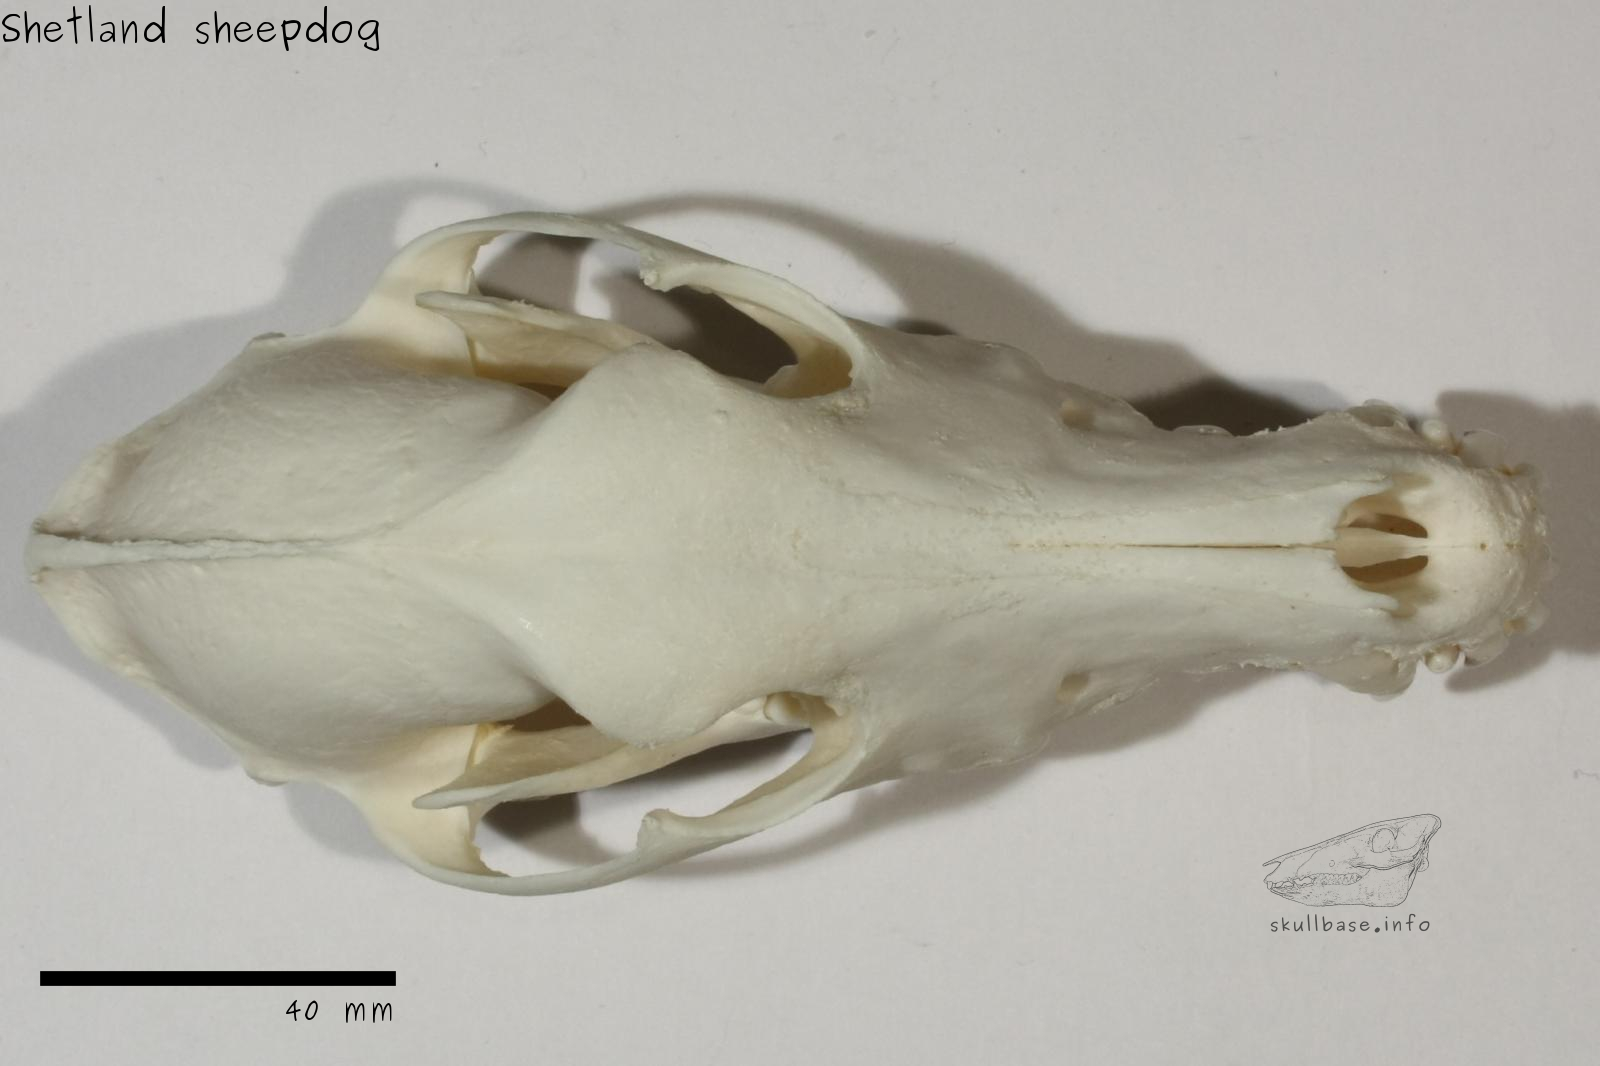 Shetland sheepdog (Canis lupus familiaris) skull dorsal view